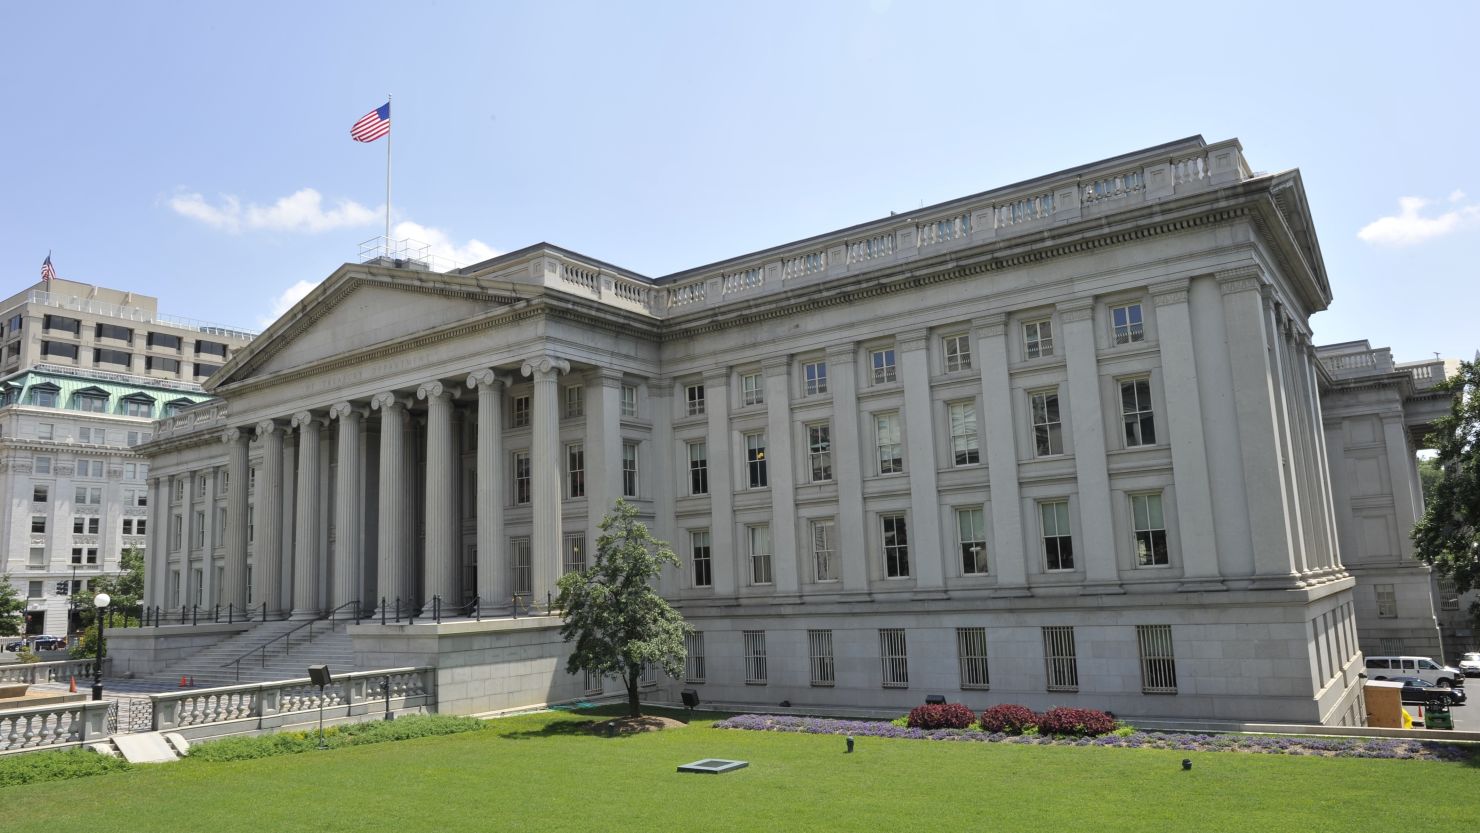 The Treasury Department building in Washington, D.C.